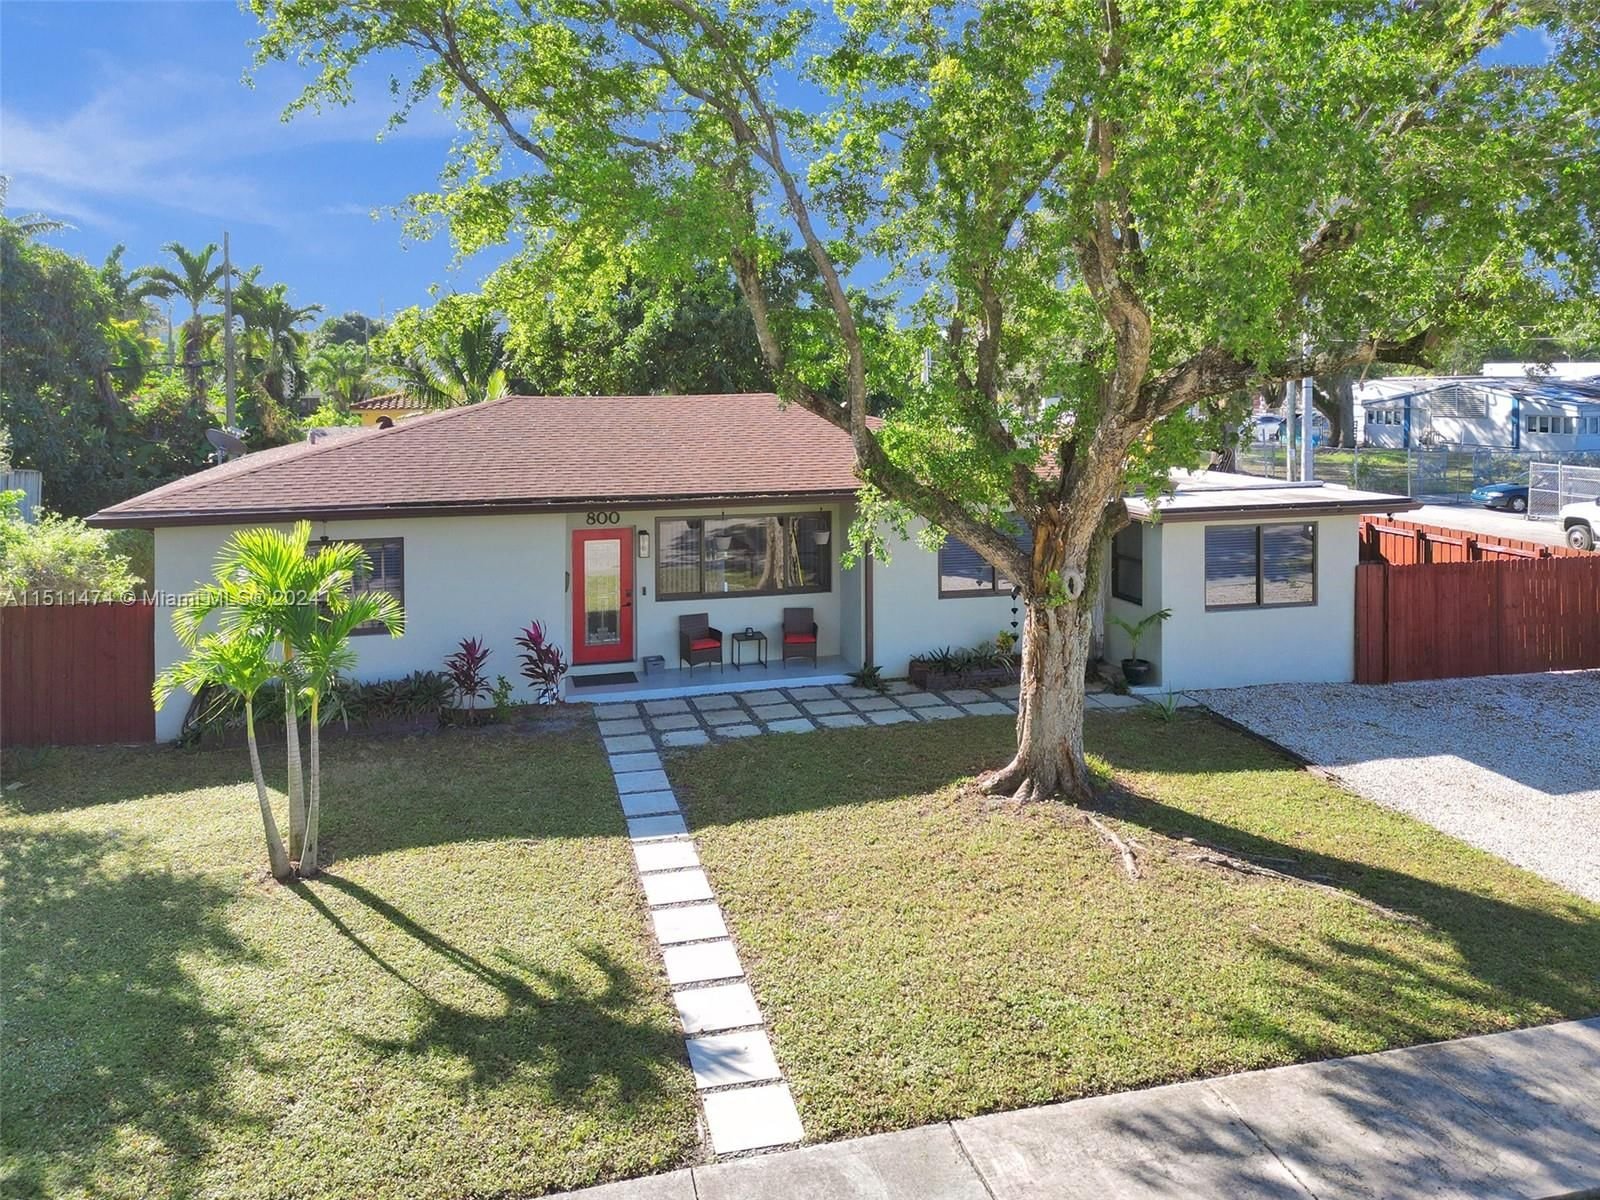 Real estate property located at 800 157th Ter, Miami-Dade County, MORRIS ADDN, North Miami Beach, FL